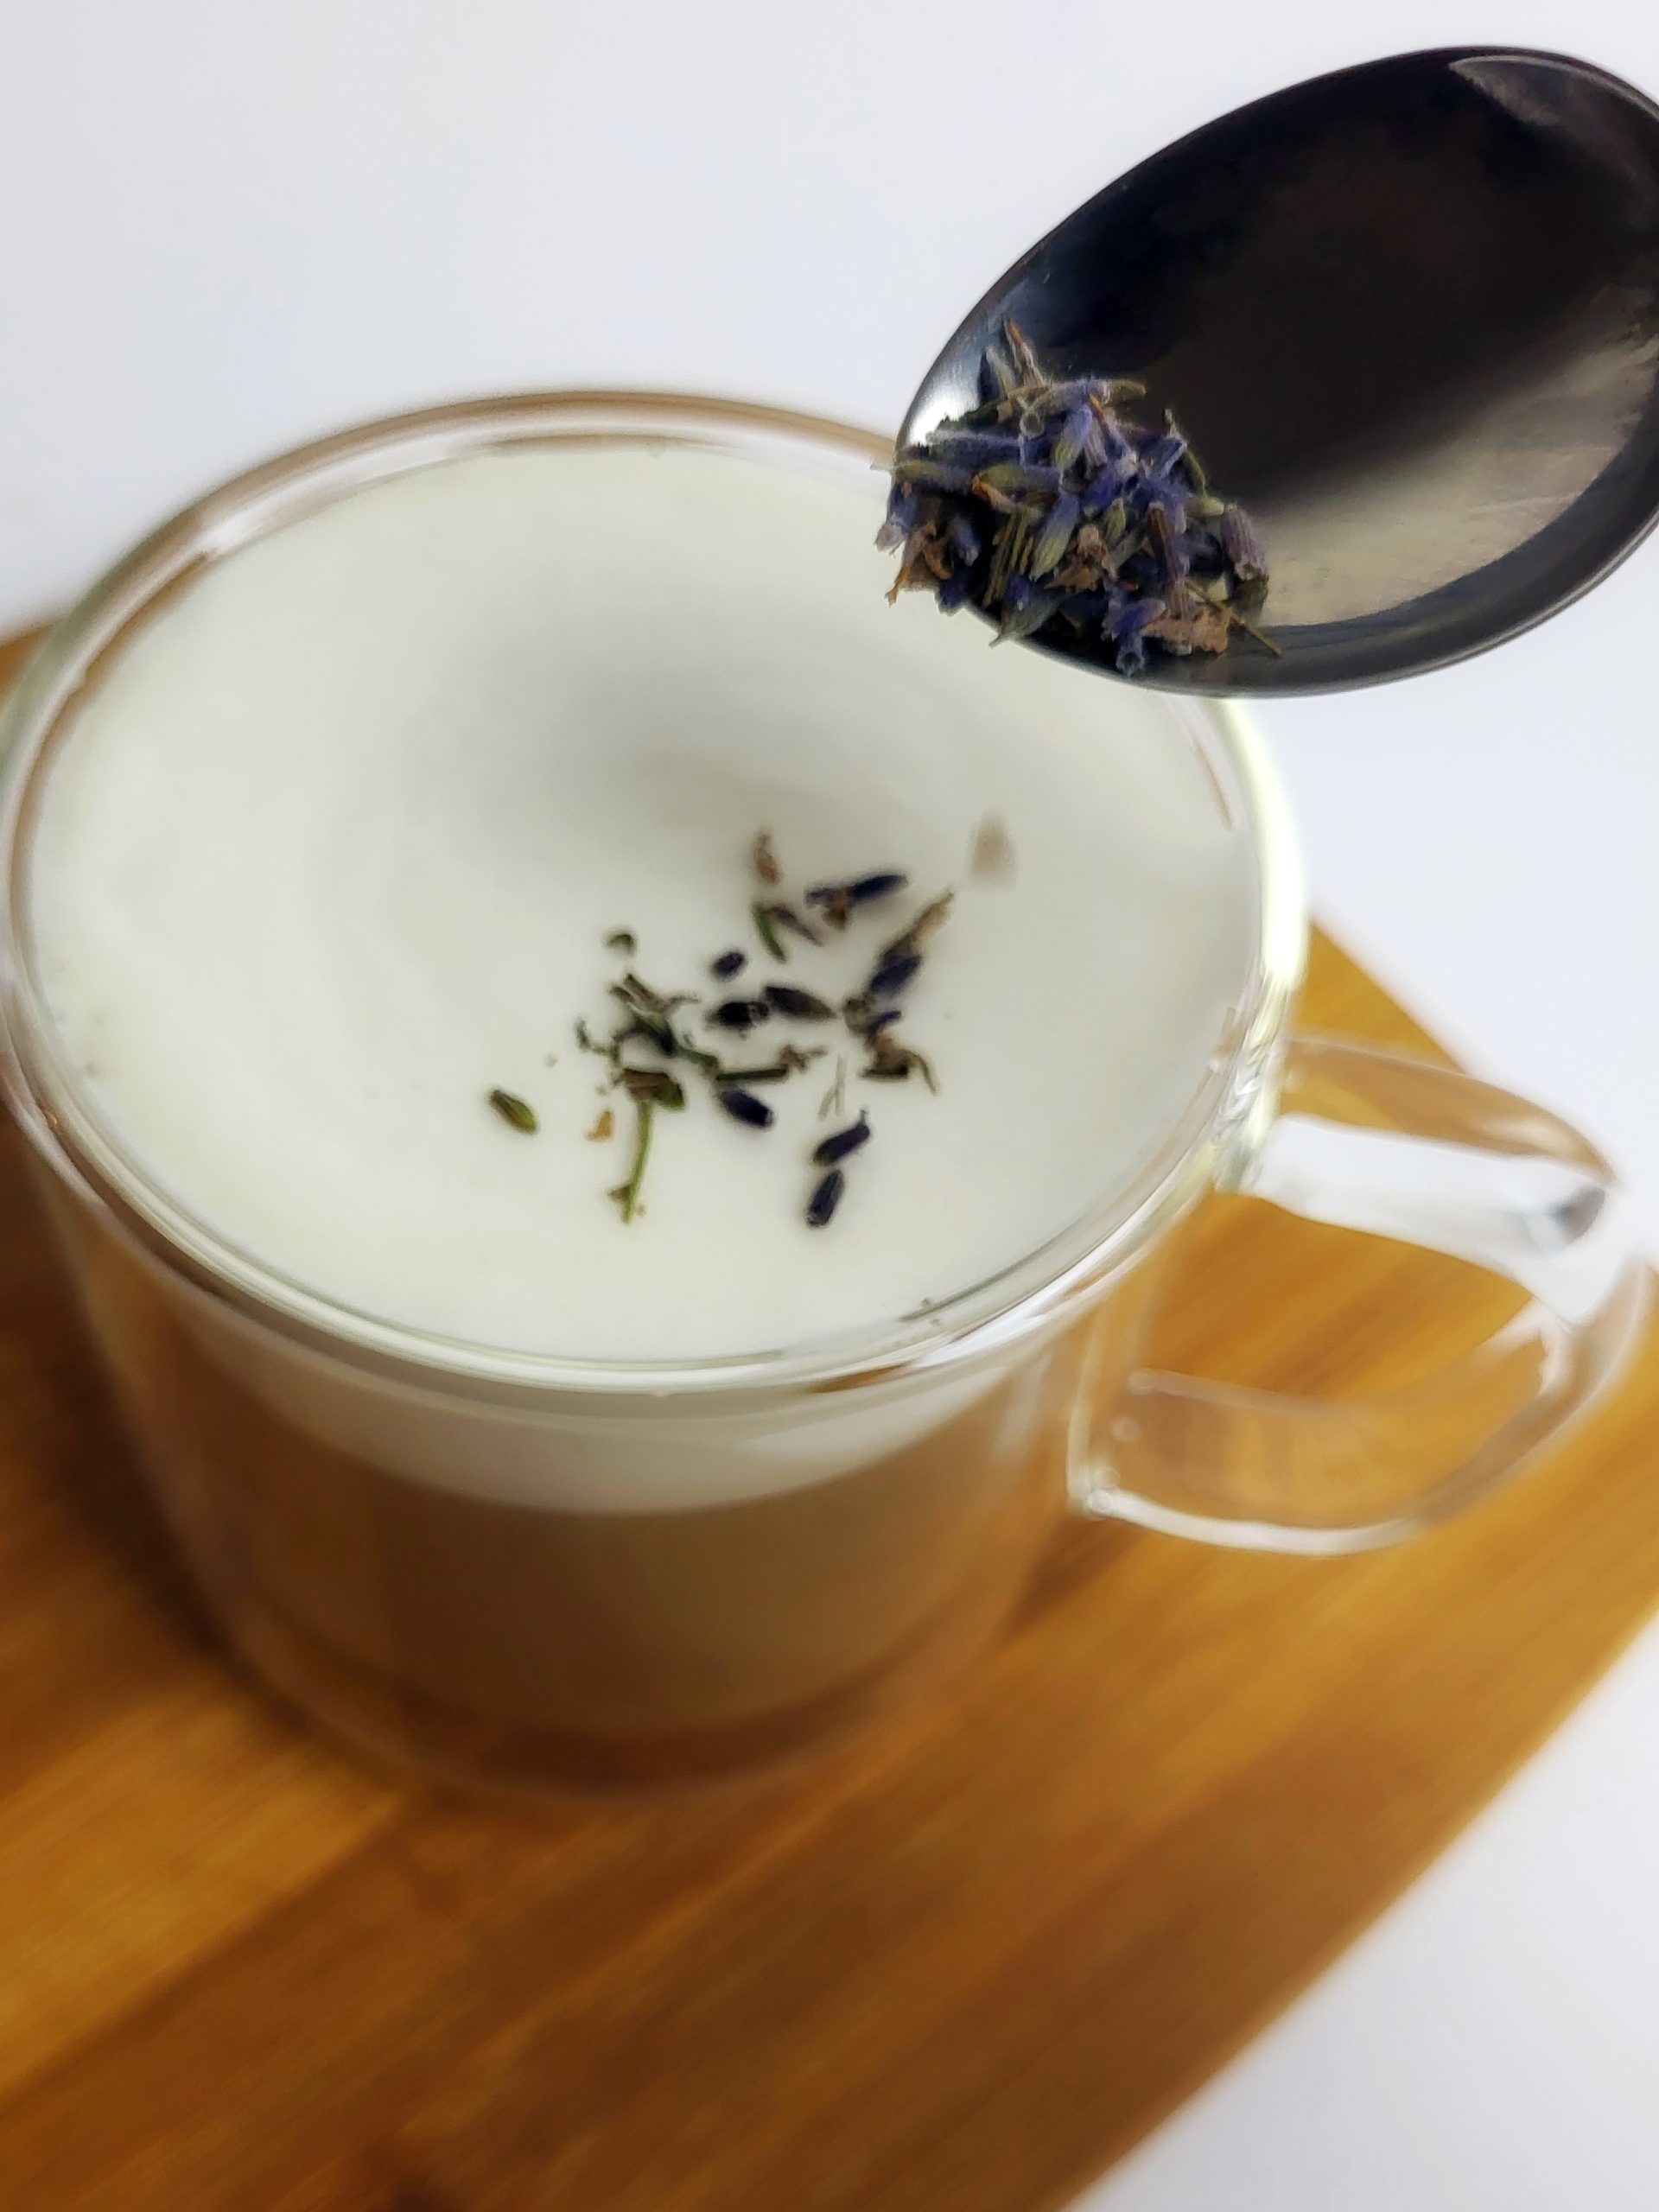 a teaspoon sprinkling dried lavender flowers on top of a tea latte